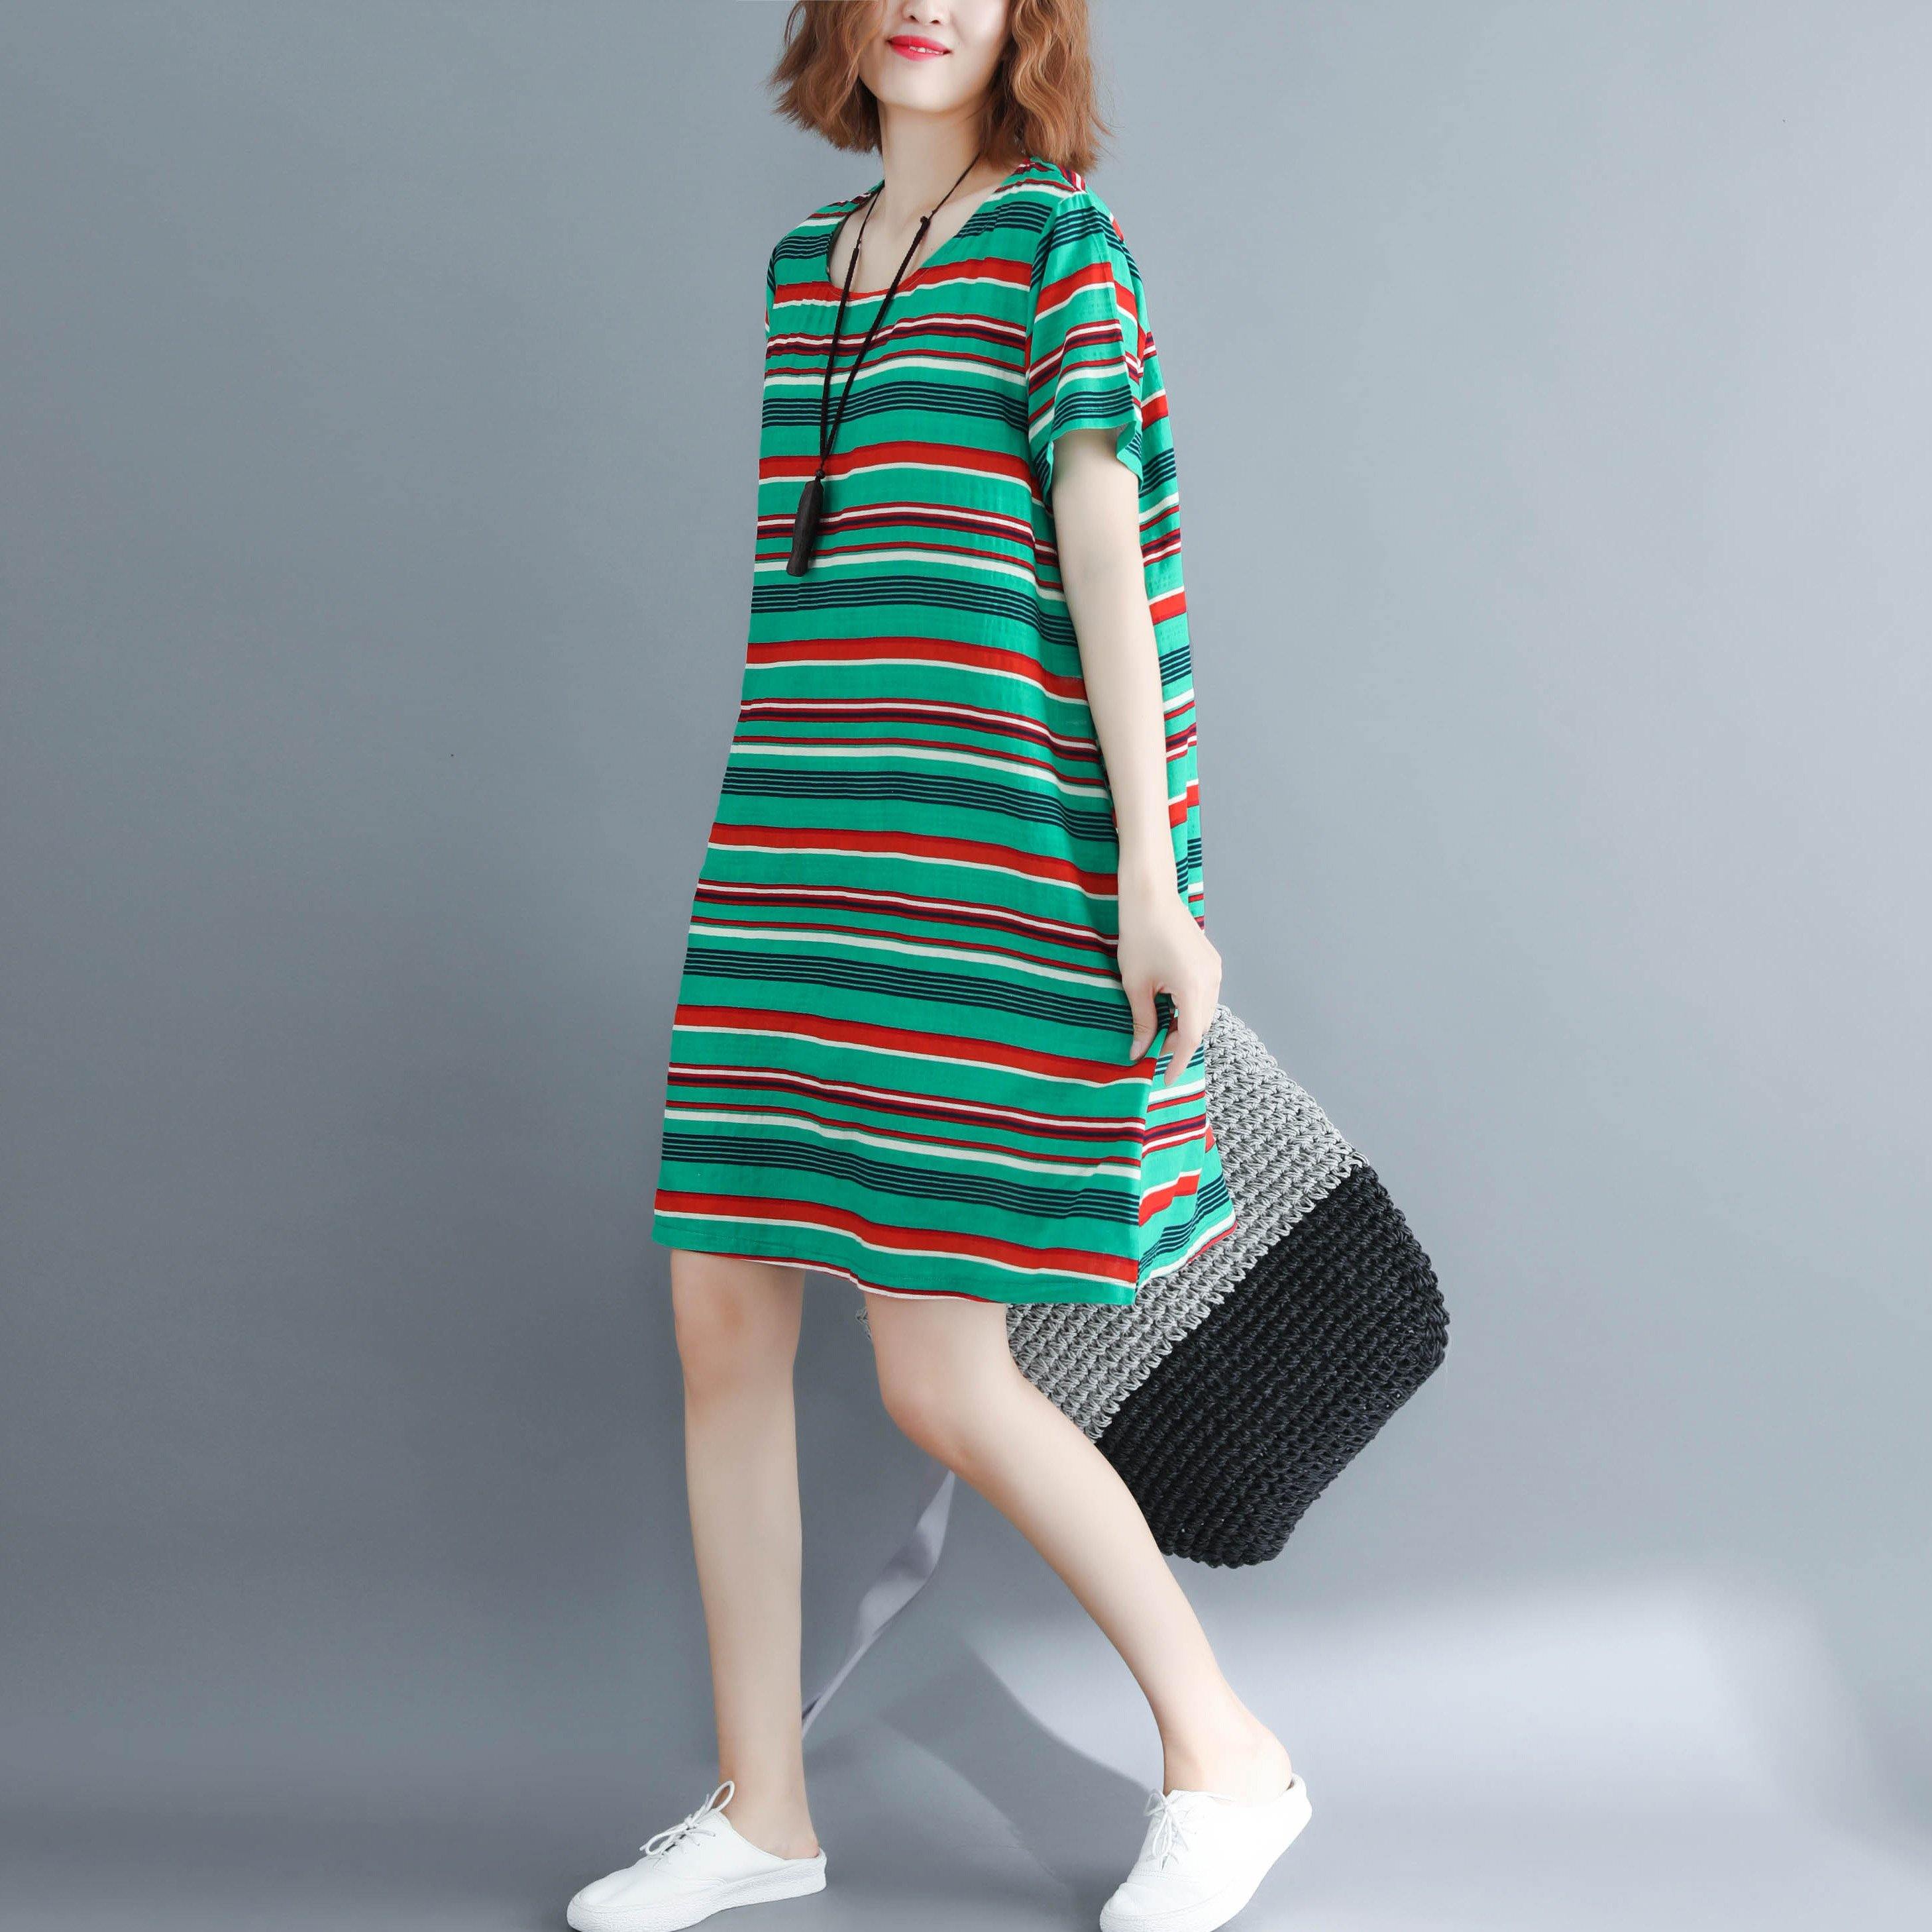 DIY green striped linen dress plus size Fabrics o neck Vestidos De Lino summer Dress - Omychic